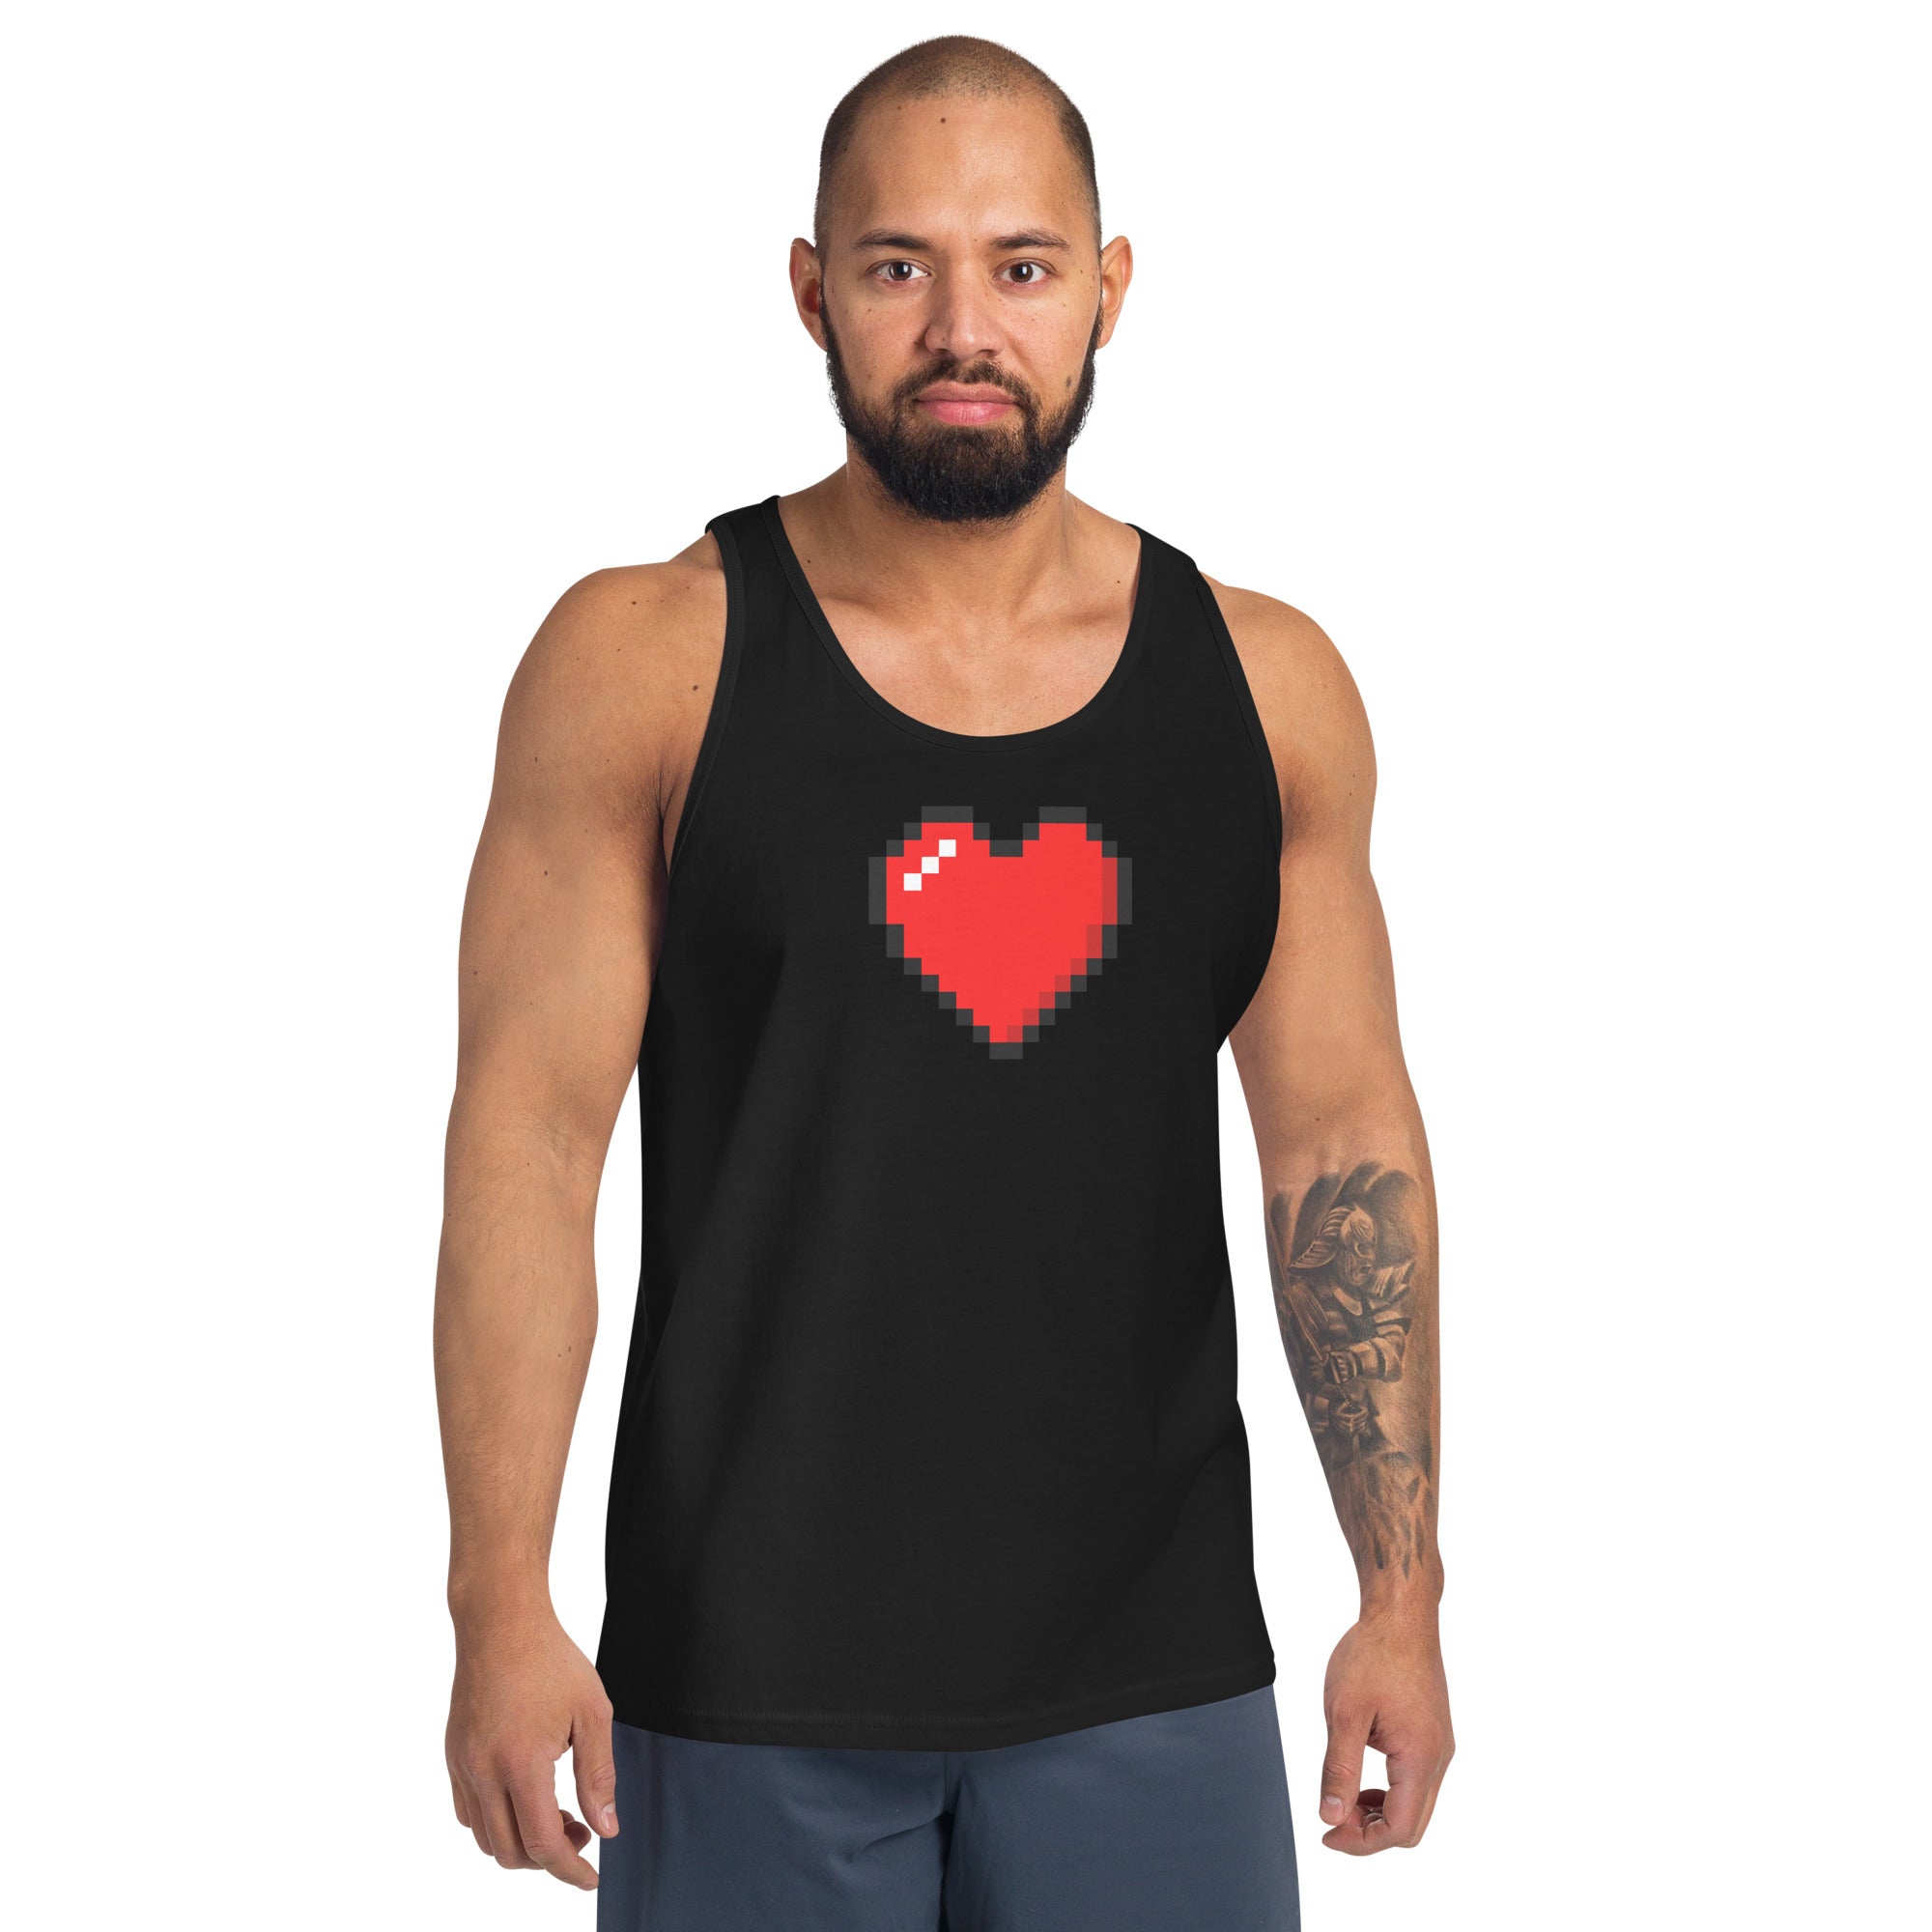 Retro 8 Bit Video Game Pixelated Heart Men's Tank Top Shirt